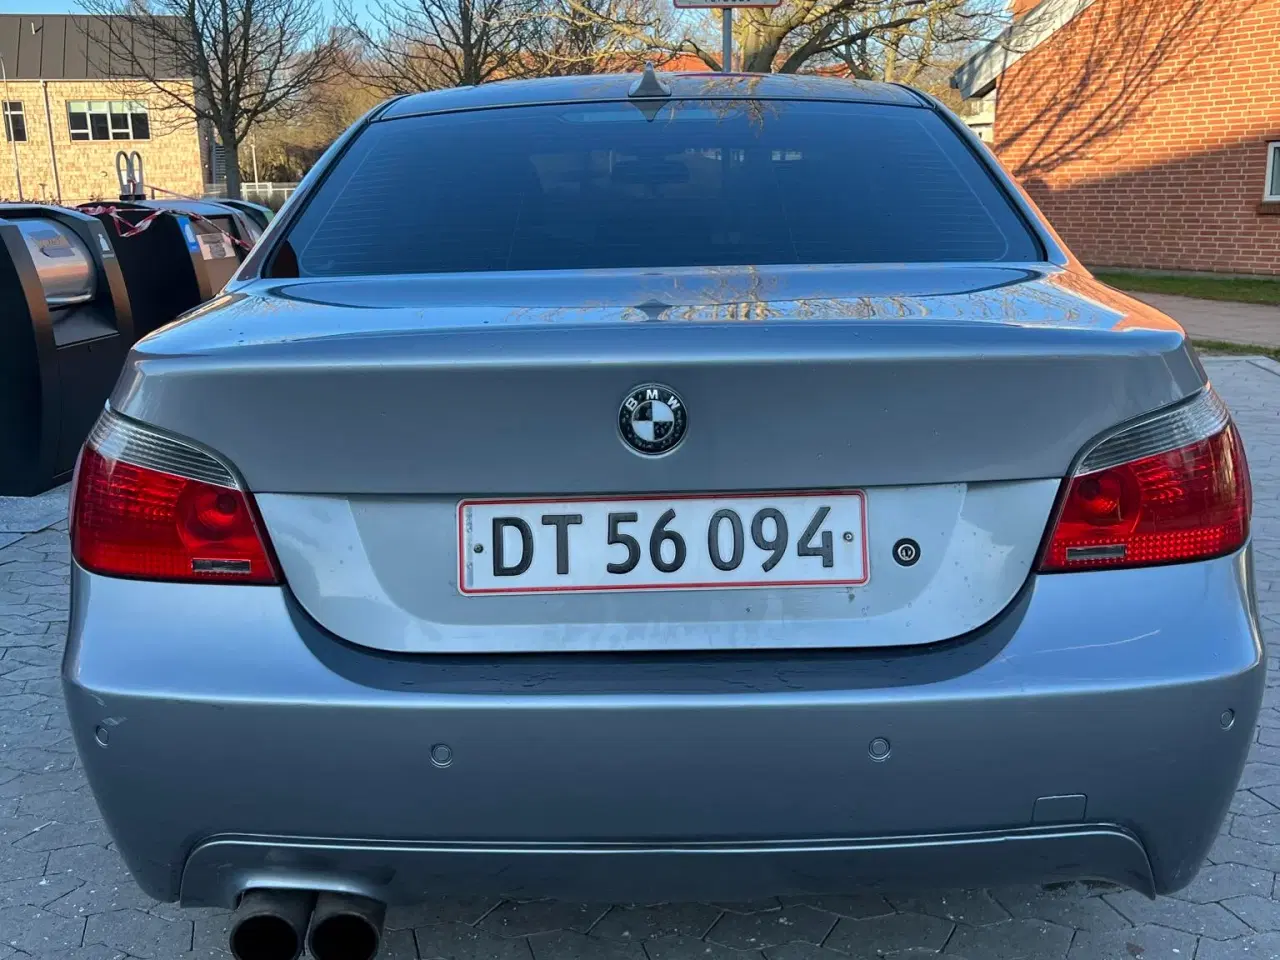 Billede 2 - Personbil BMW 520i